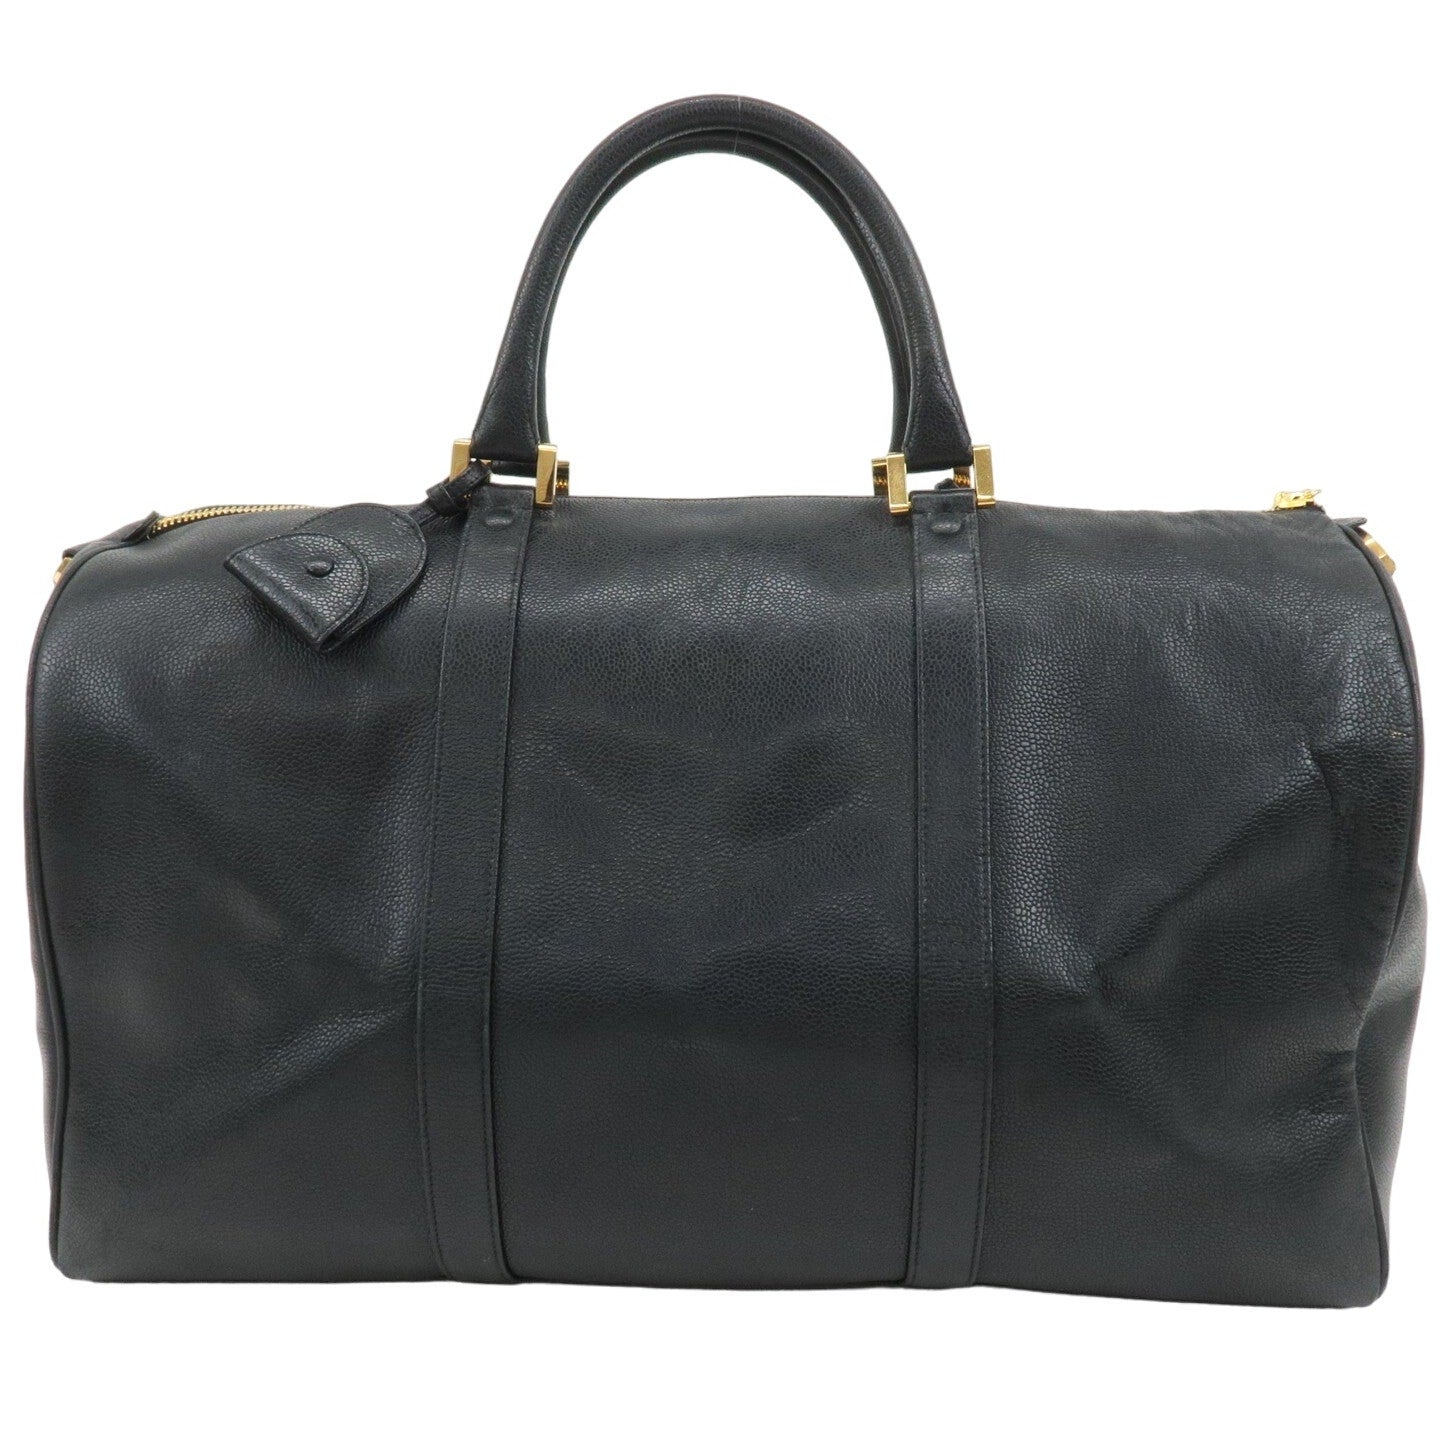 Authentic CHANEL Boston Bag Travel Bag Black